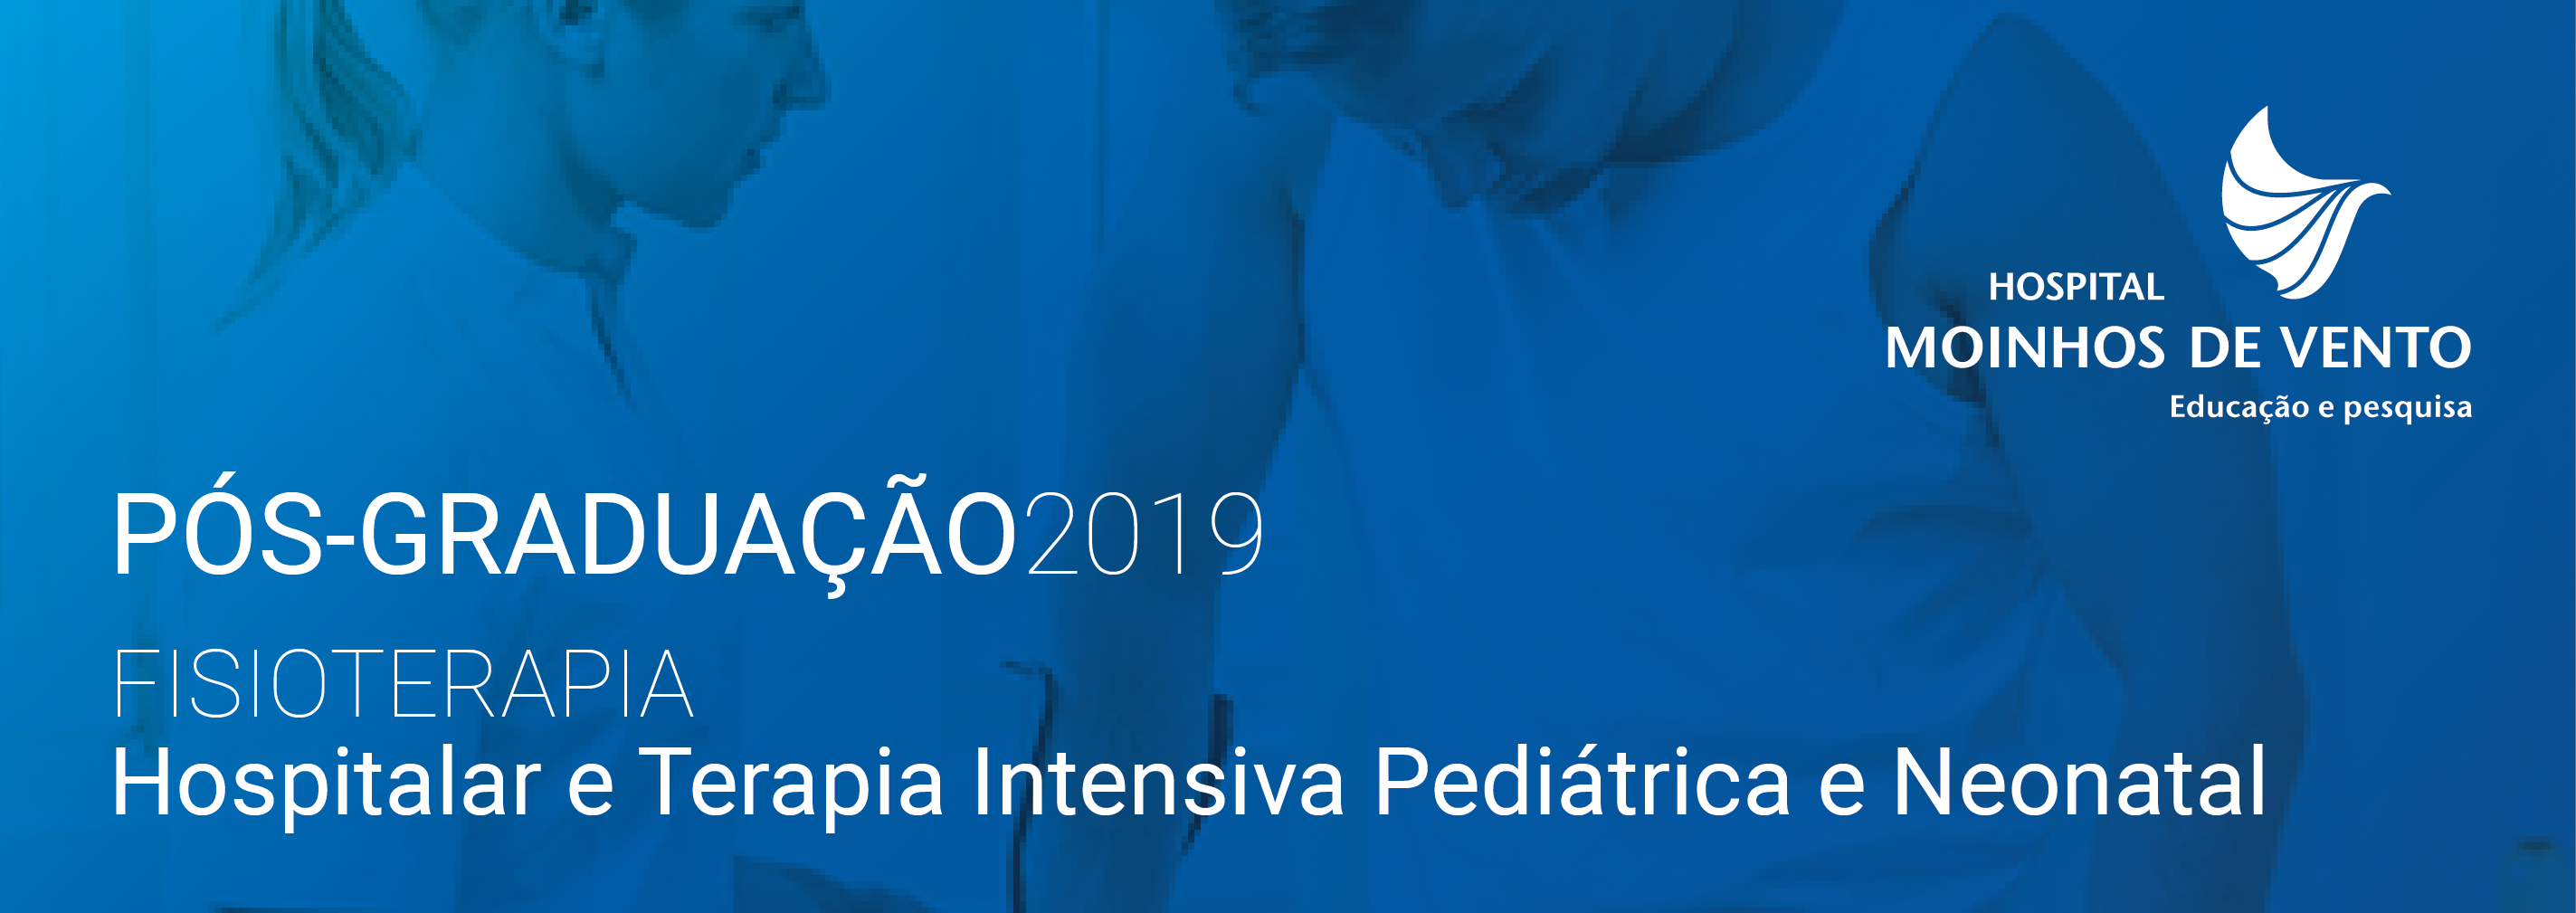 Pós-Graduação Fisioterapia Terapia Intensiva Pediátrica e Neonatal IEP-PGFISOCTIPN-2020